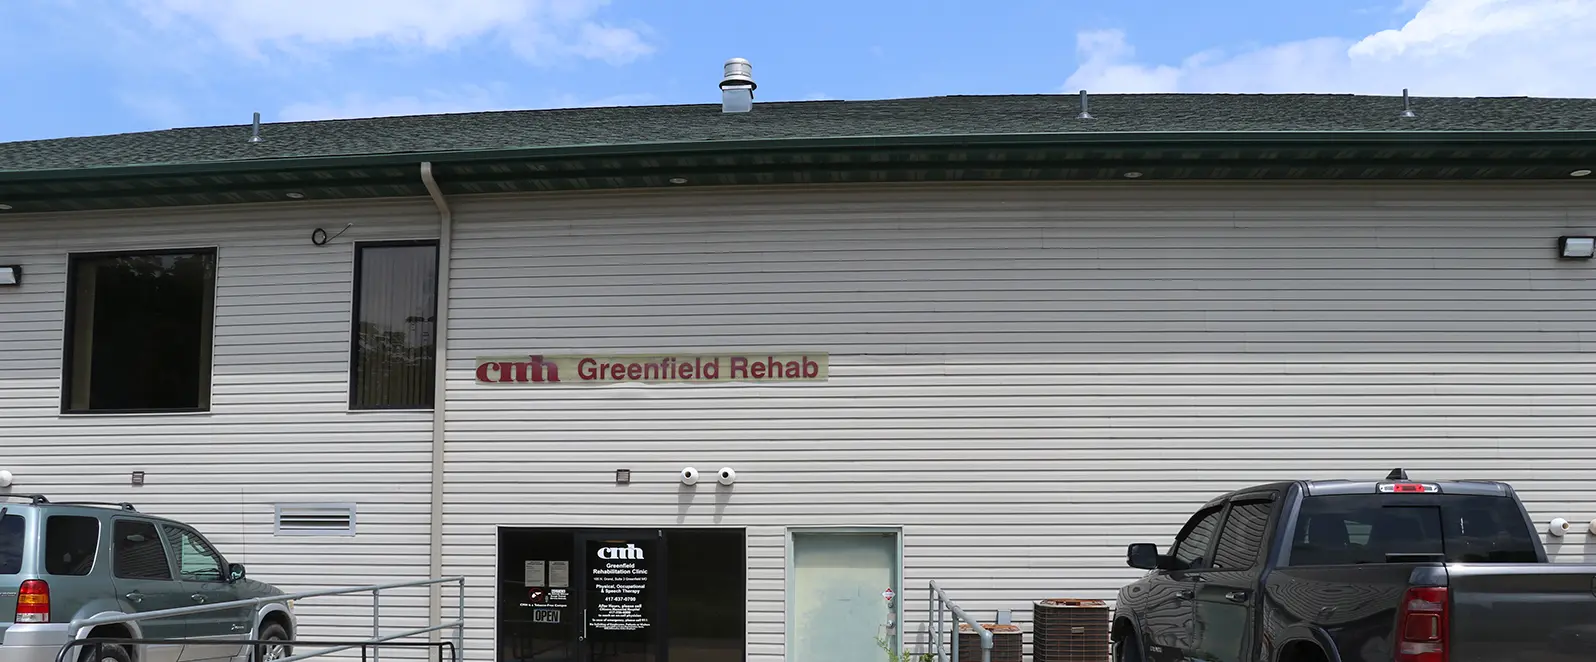 Greenfield Rehabilitation  building exterior